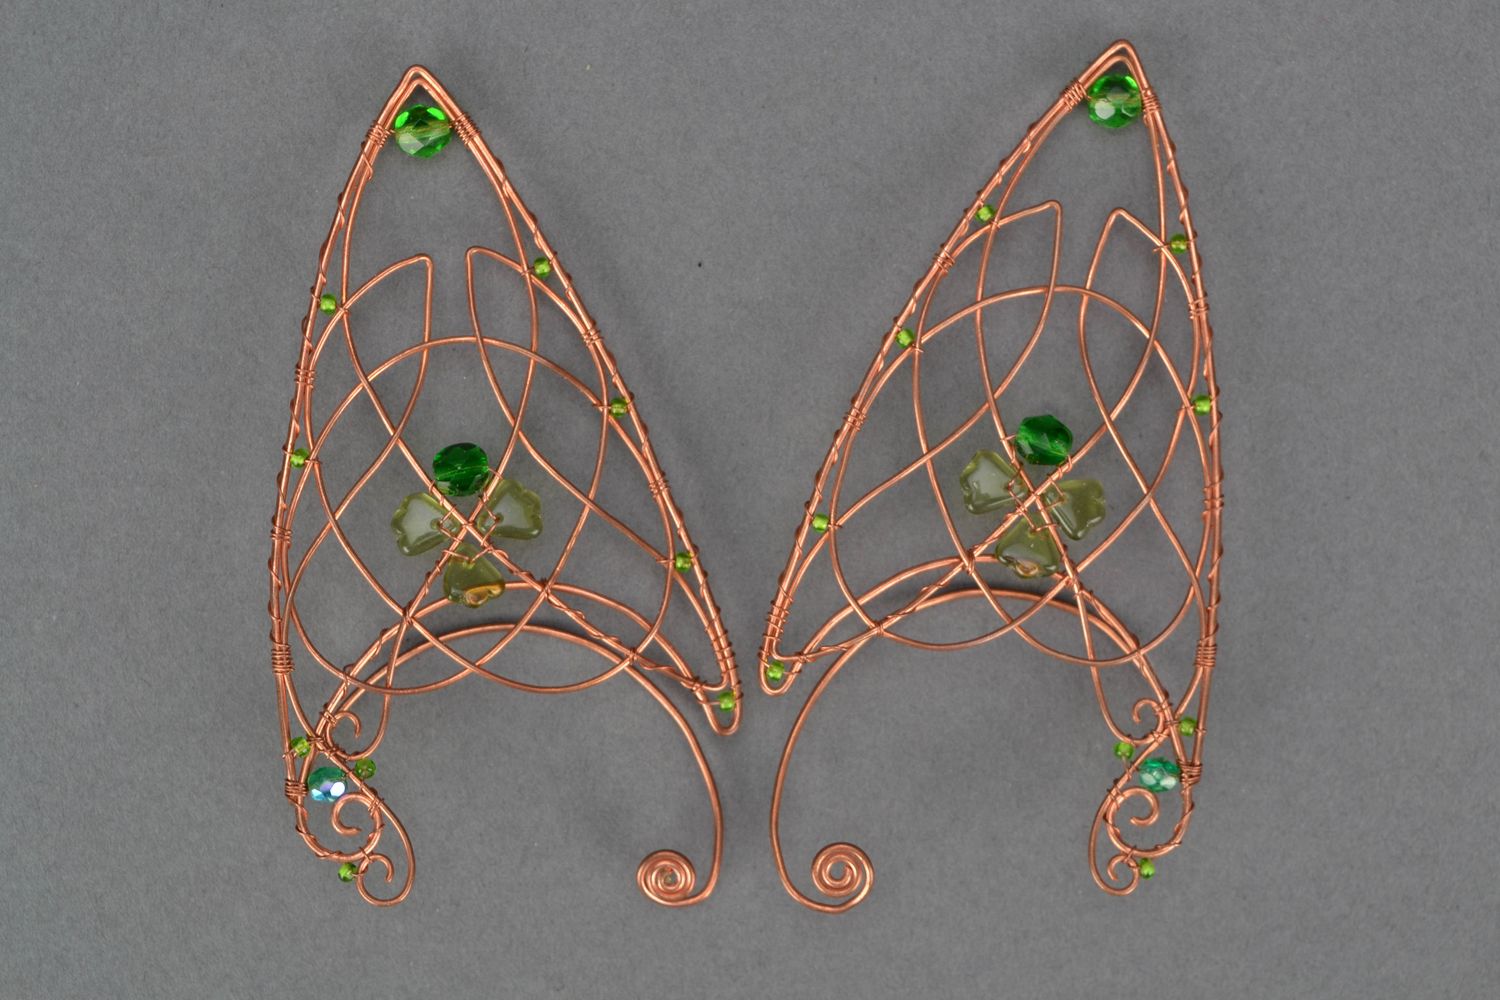 Metal woven cuff earrings in elves style photo 3